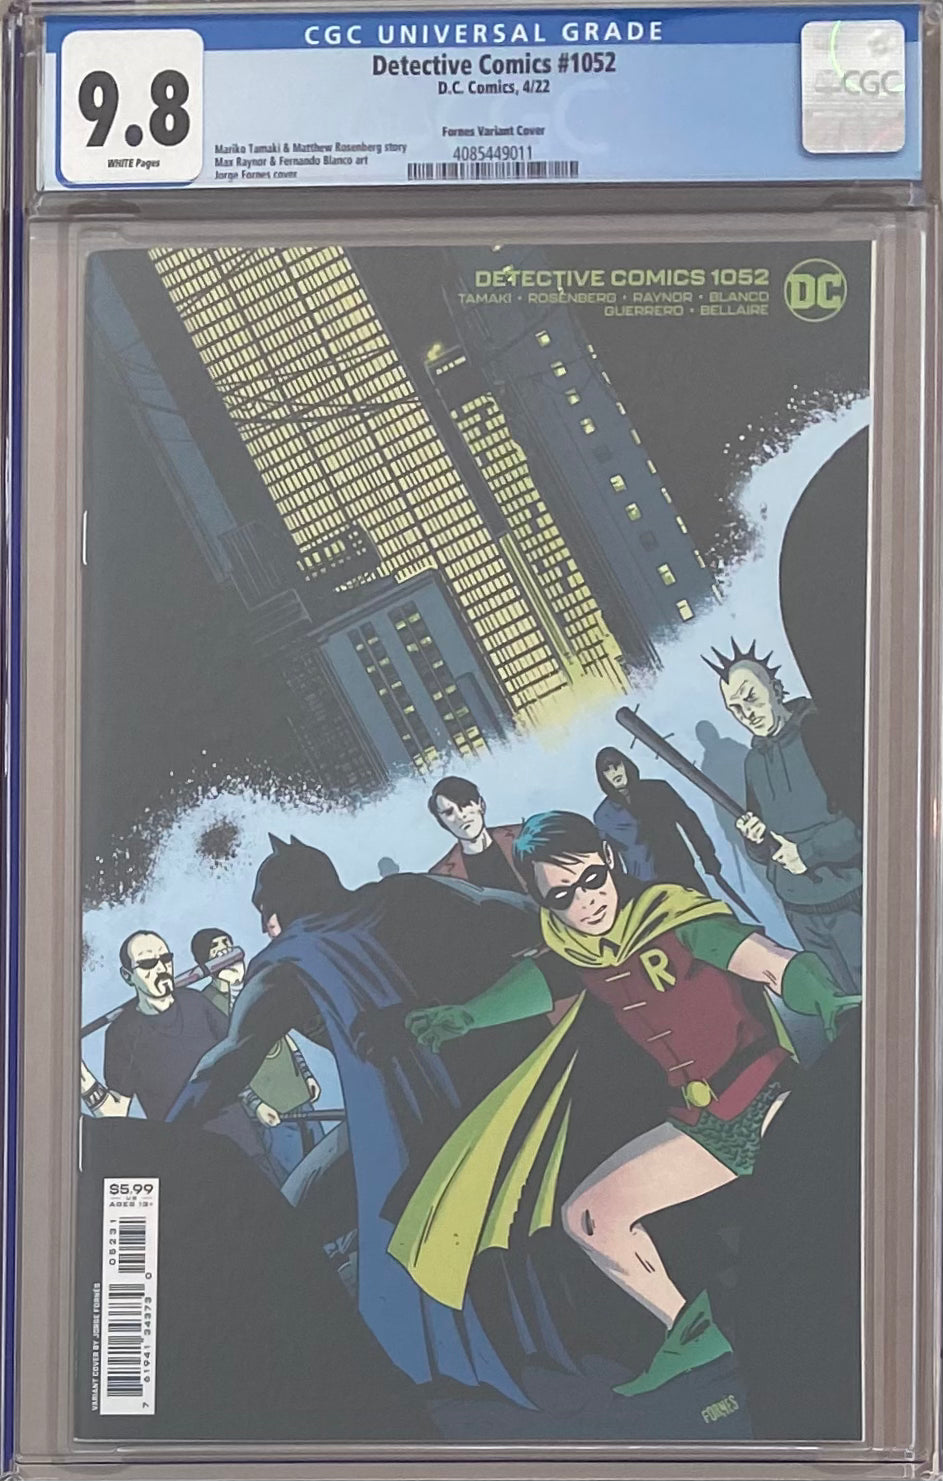 Detective Comics #1052 Fornes 1:25 Retailer Incentive Variant CGC 9.8